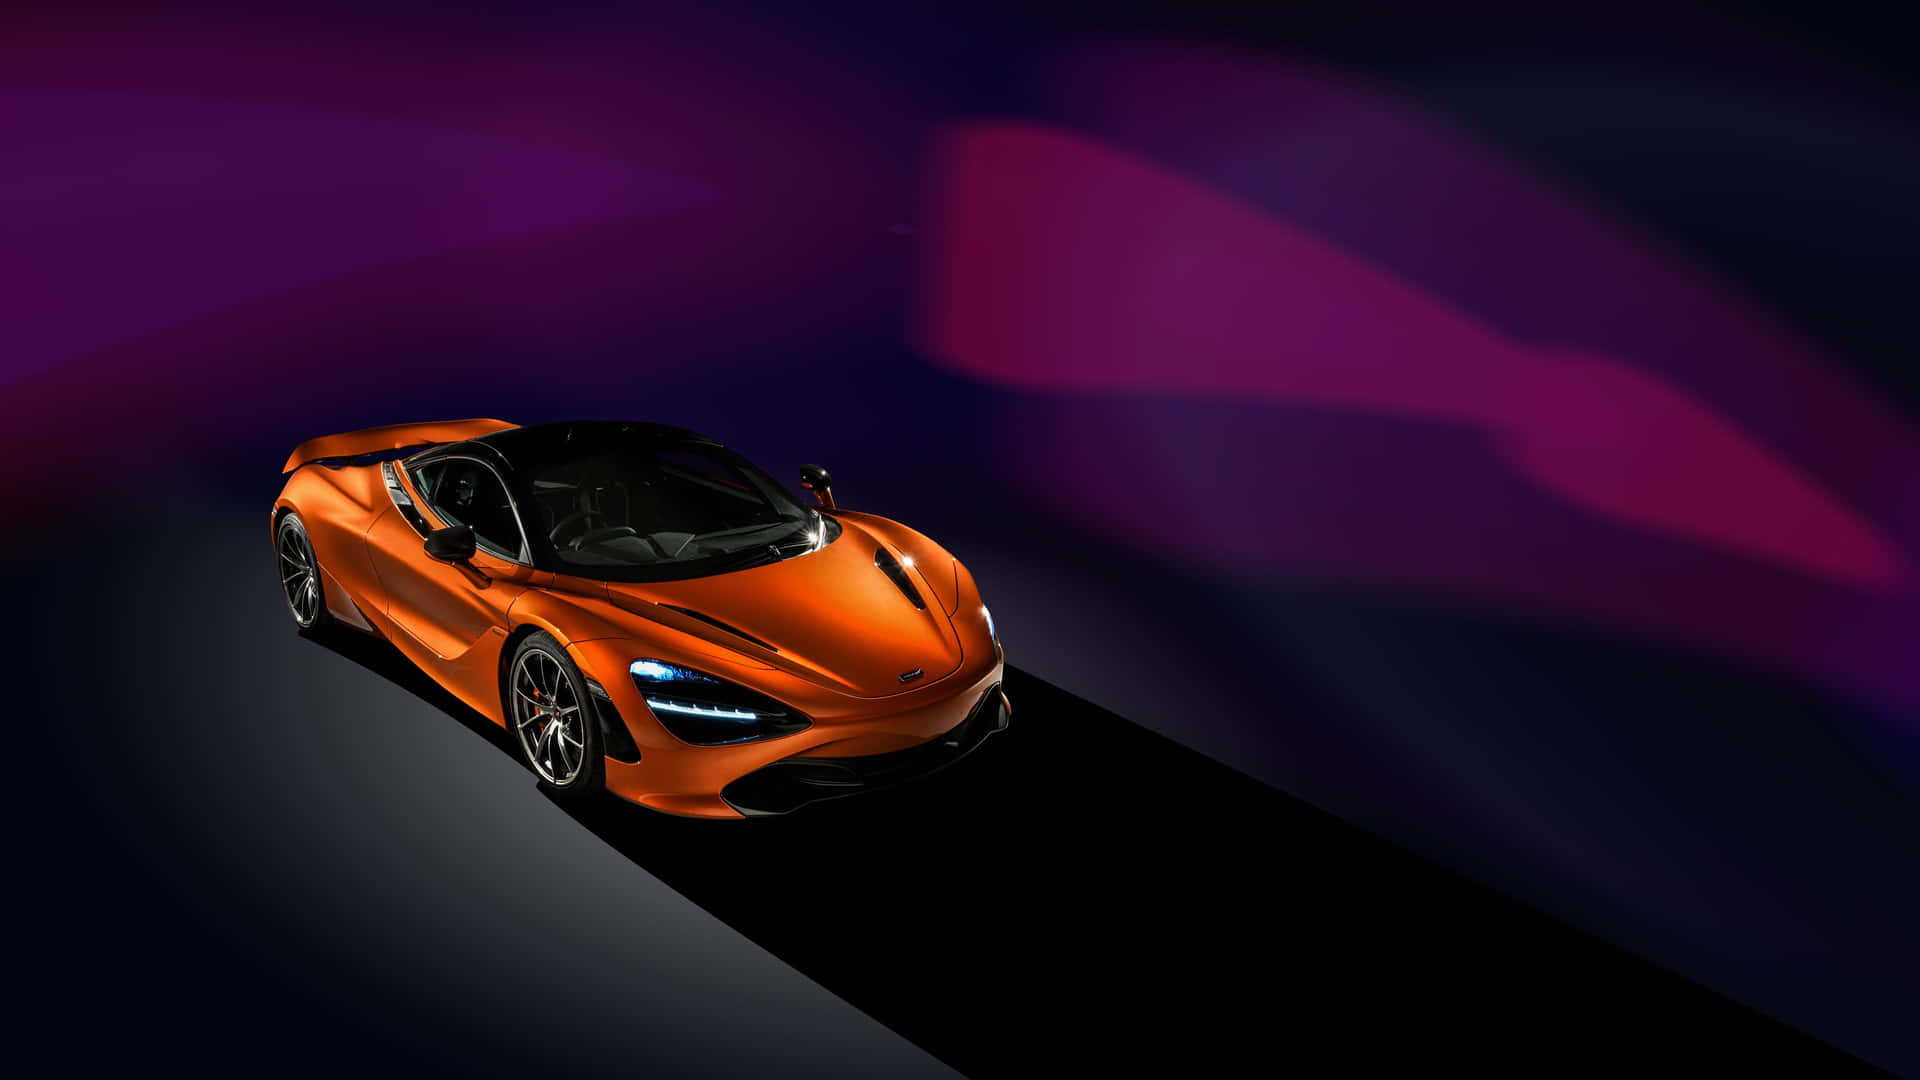 The sleek and stylish McLaren 720s